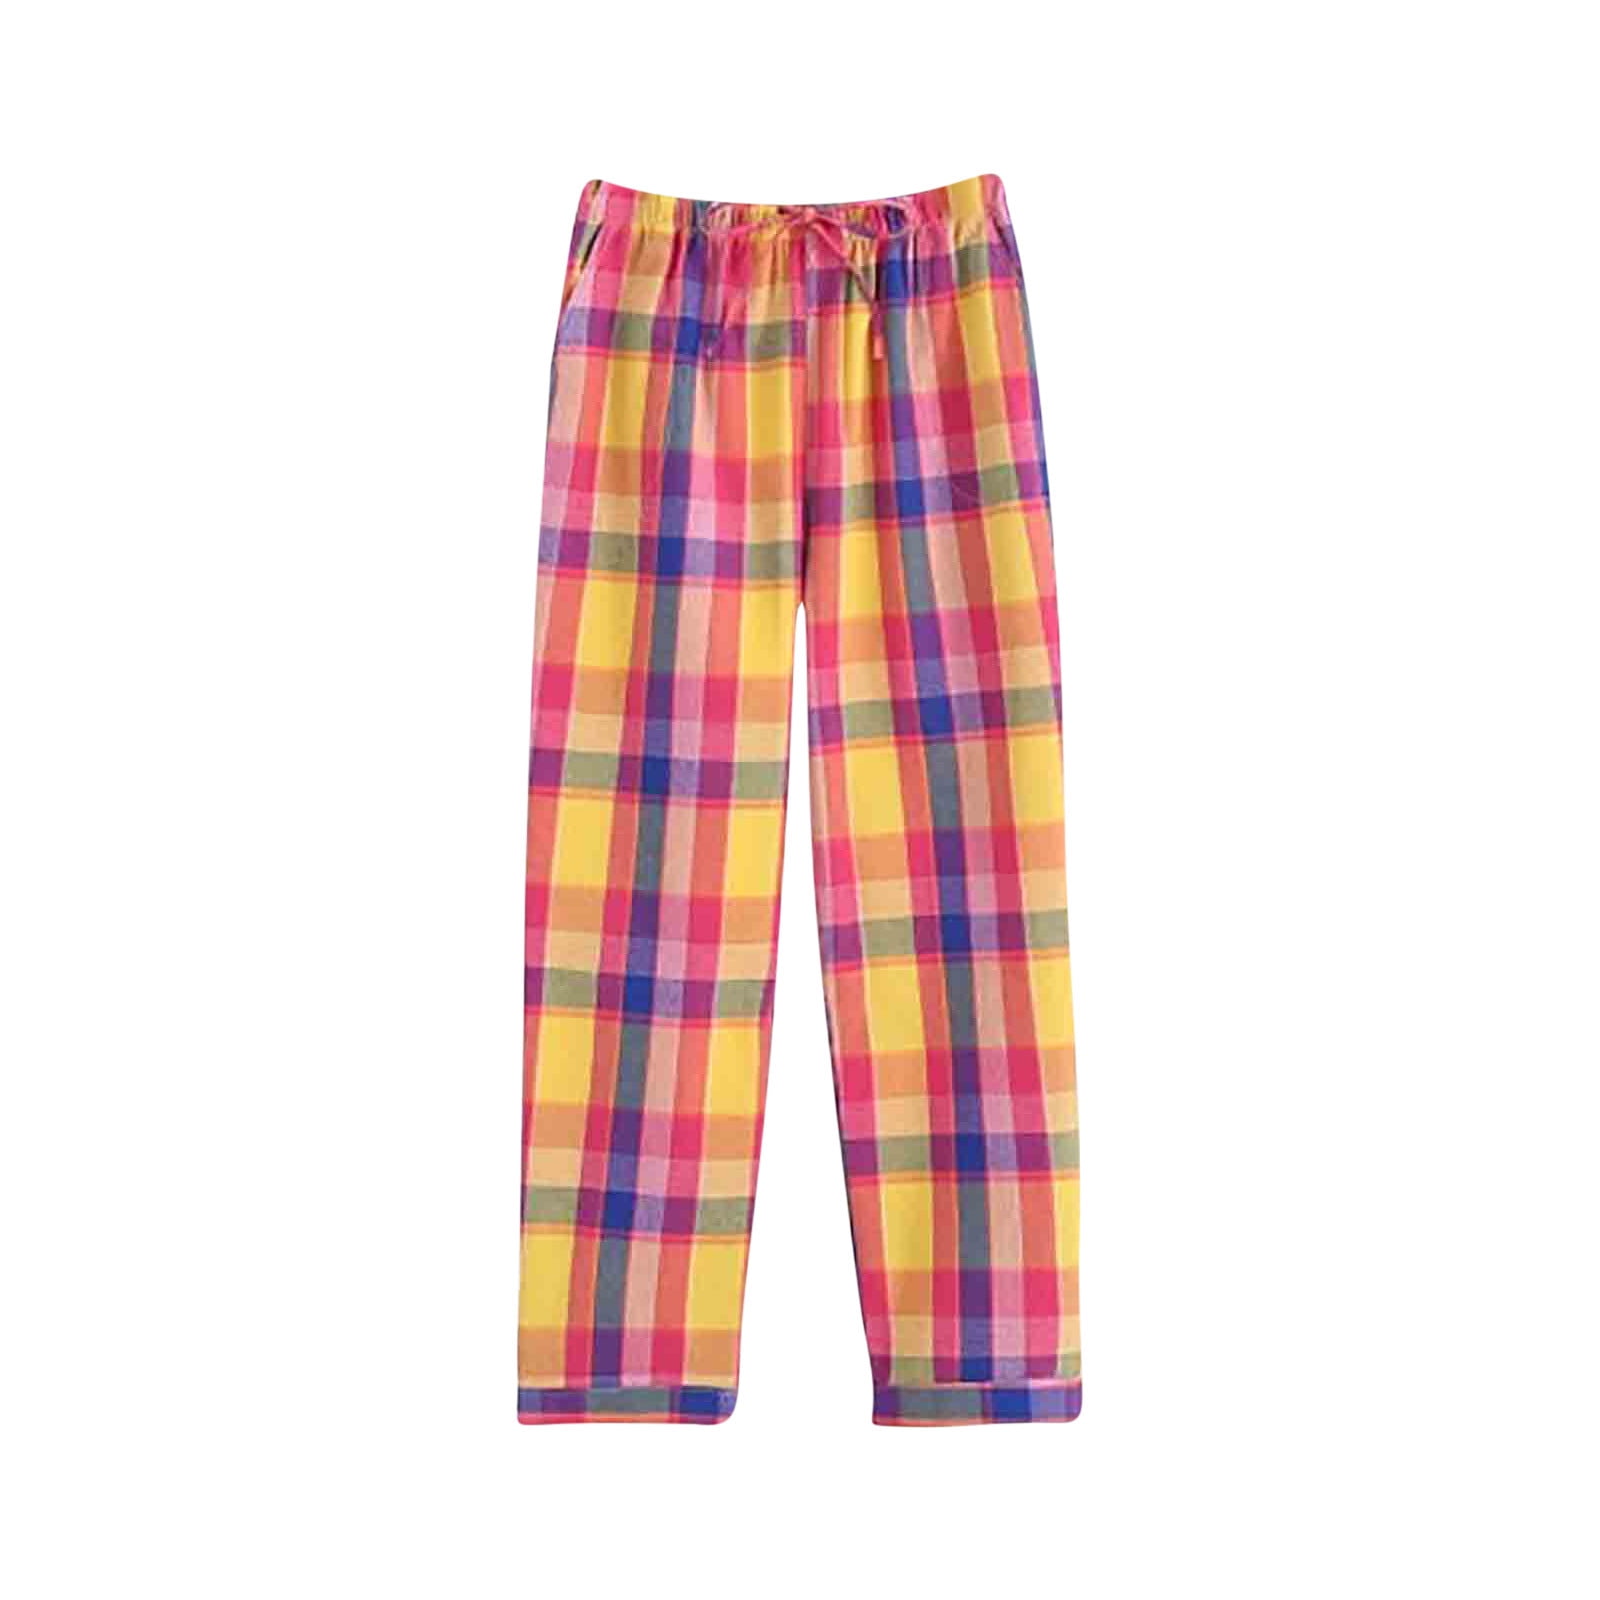 Summer Clearance Sale!TMOYZQ Women's Plaid Pajama Pants Soft Cotton ...